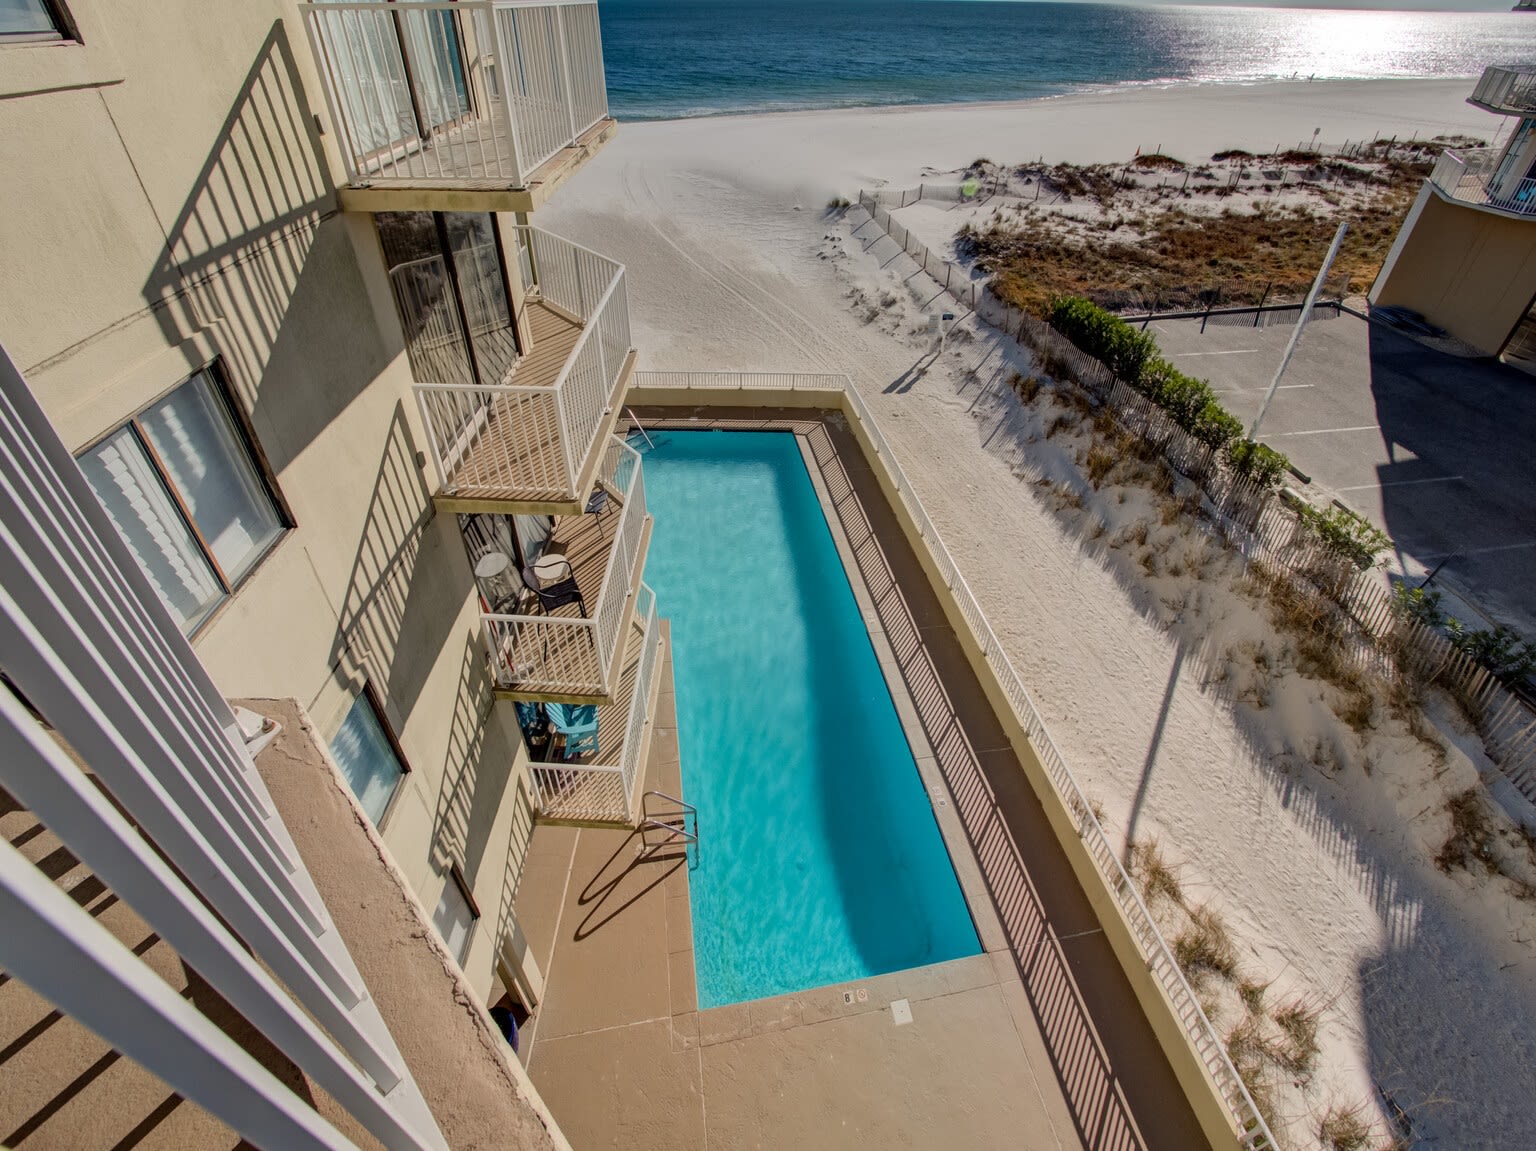 Balcony view - enjoy the white~ sandy beaches of Gulf Shores